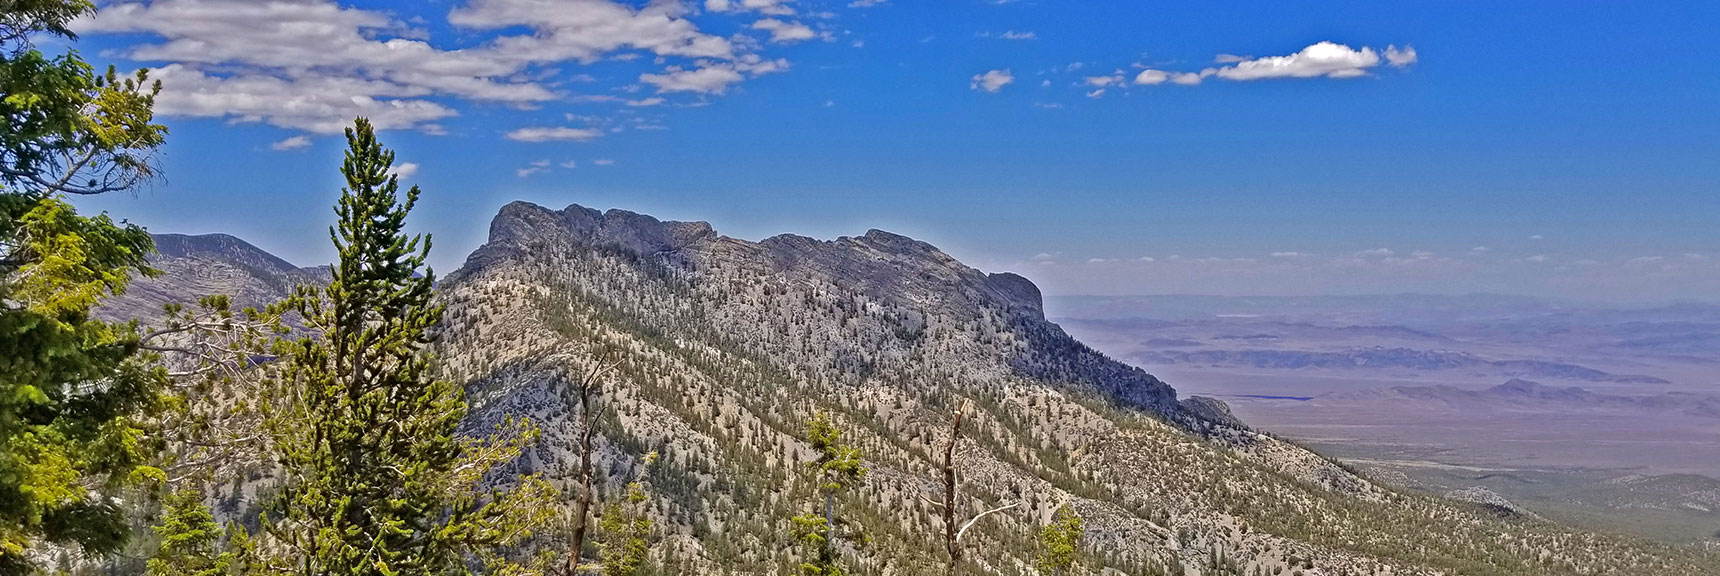 Macks Peak from the Upper Ridge | Black Rock Sister | Mt Charleston Wilderness | Lee Canyon | Spring Mountains, Nevada